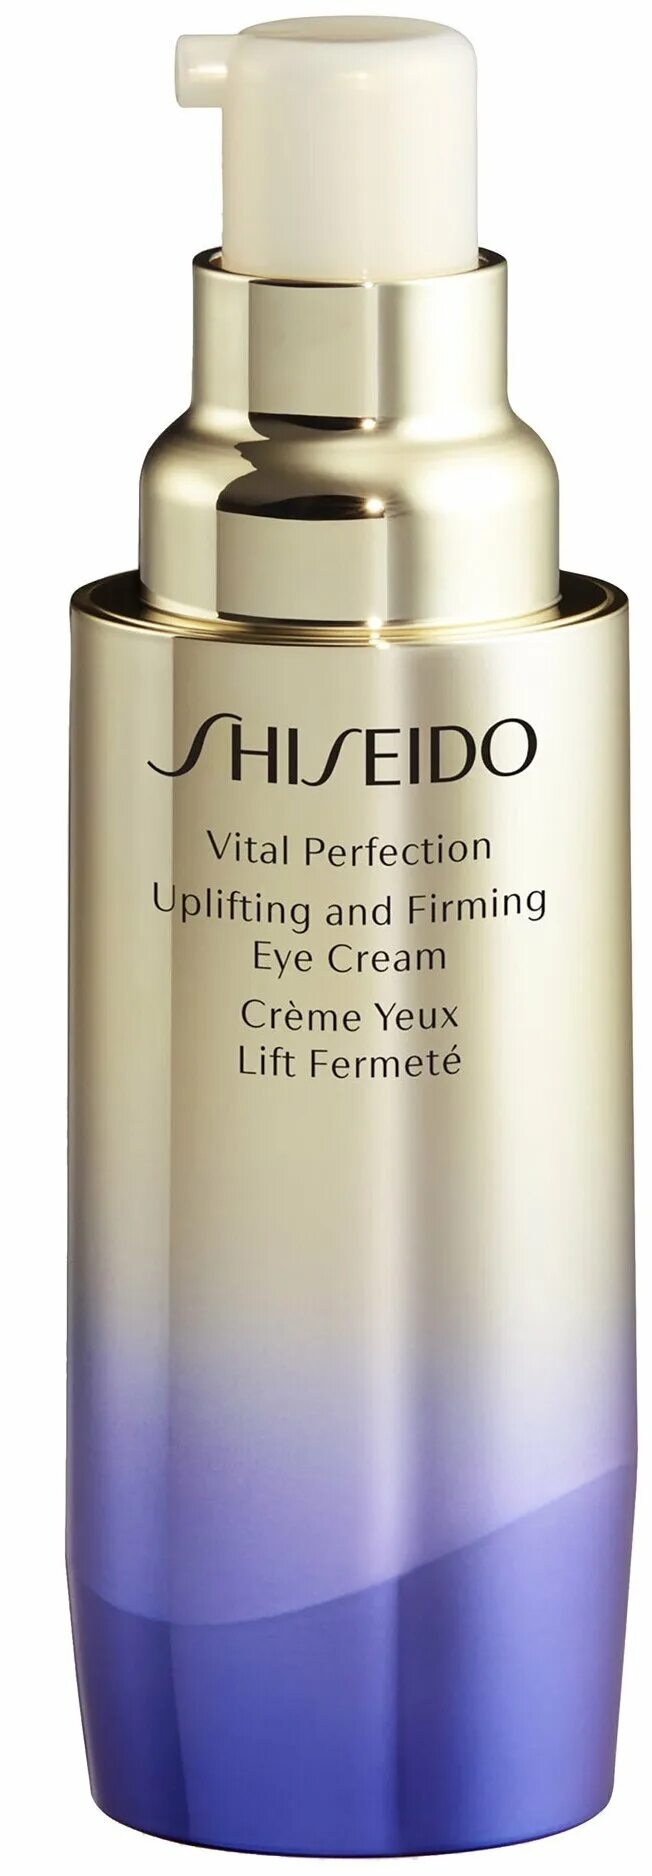 Shiseido vital perfection uplifting. Shiseido Vital perfection. Шисейдо Vital perfection Uplifting and Firming Eye Cream. Shiseido Vital perfection вокруг глаз.